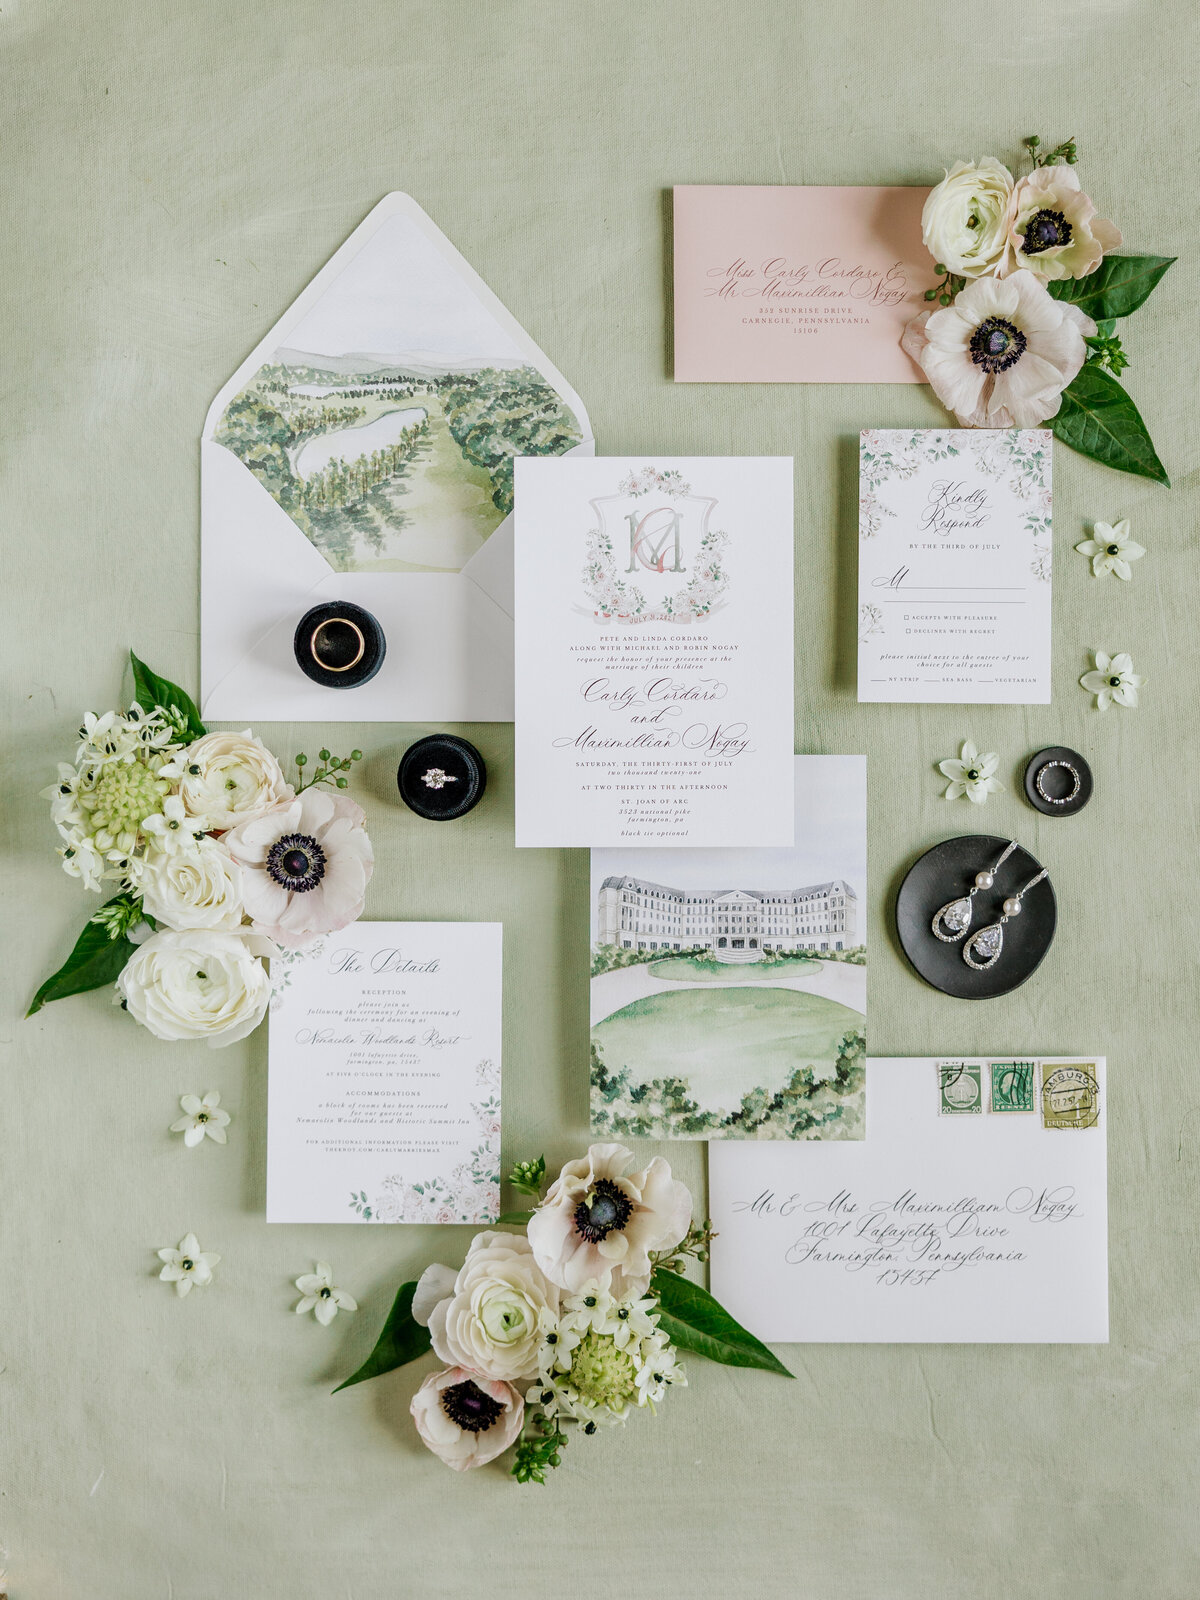 LRD_Nogay Wedding_Details-1-2